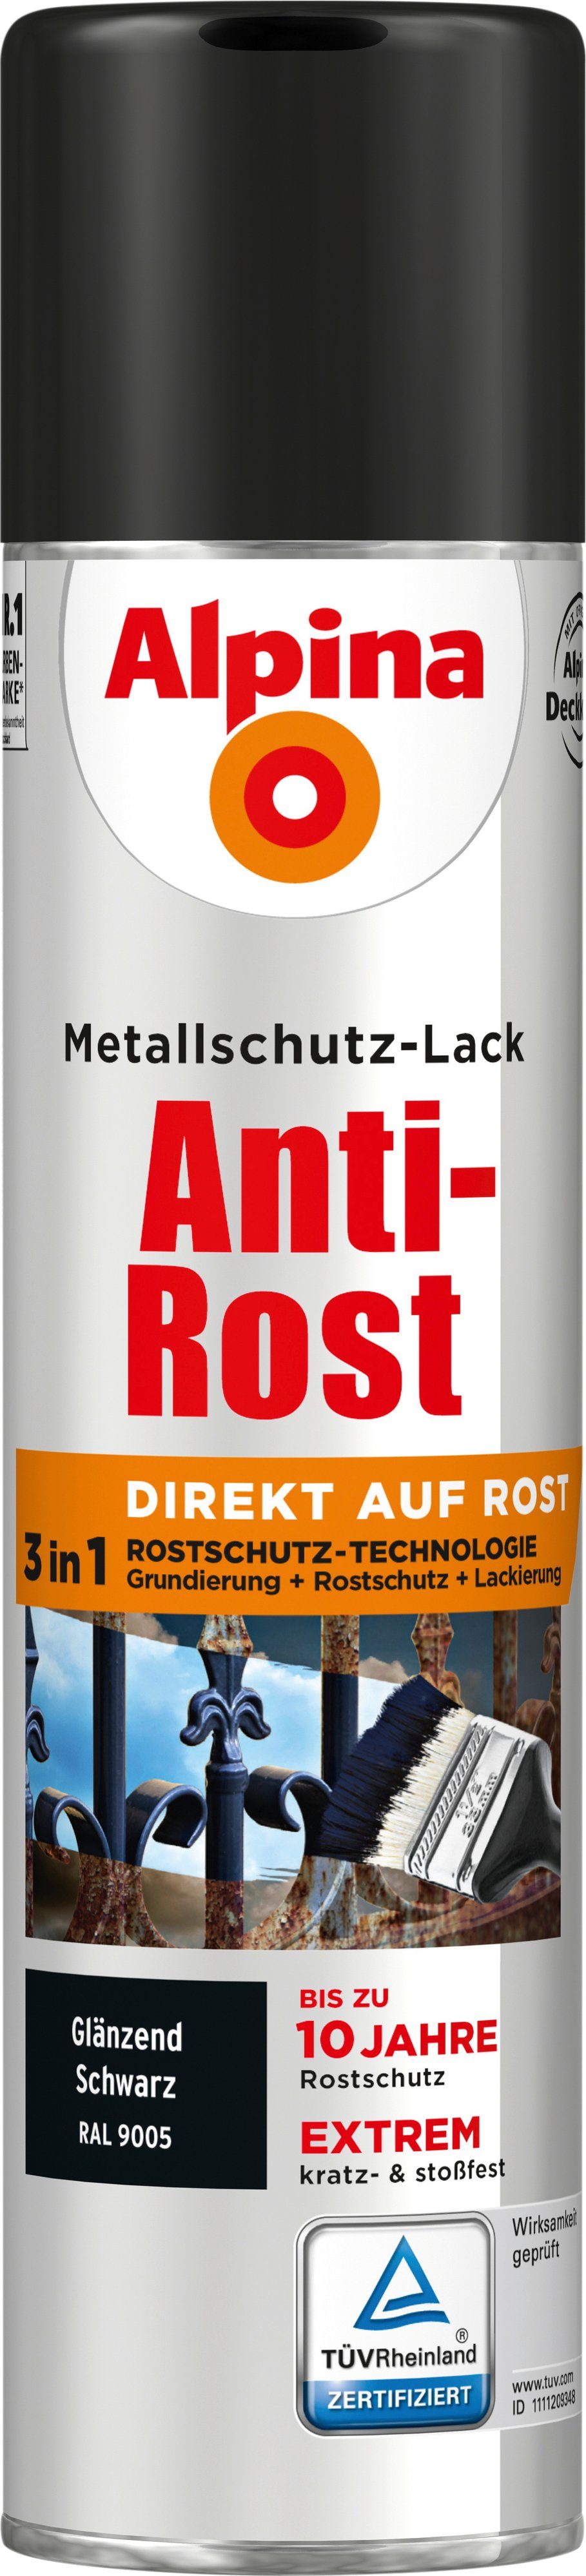 Sprühmetallschutz-Lack Alpina Metallschutzlack Anti ml 400 Alpina Rost